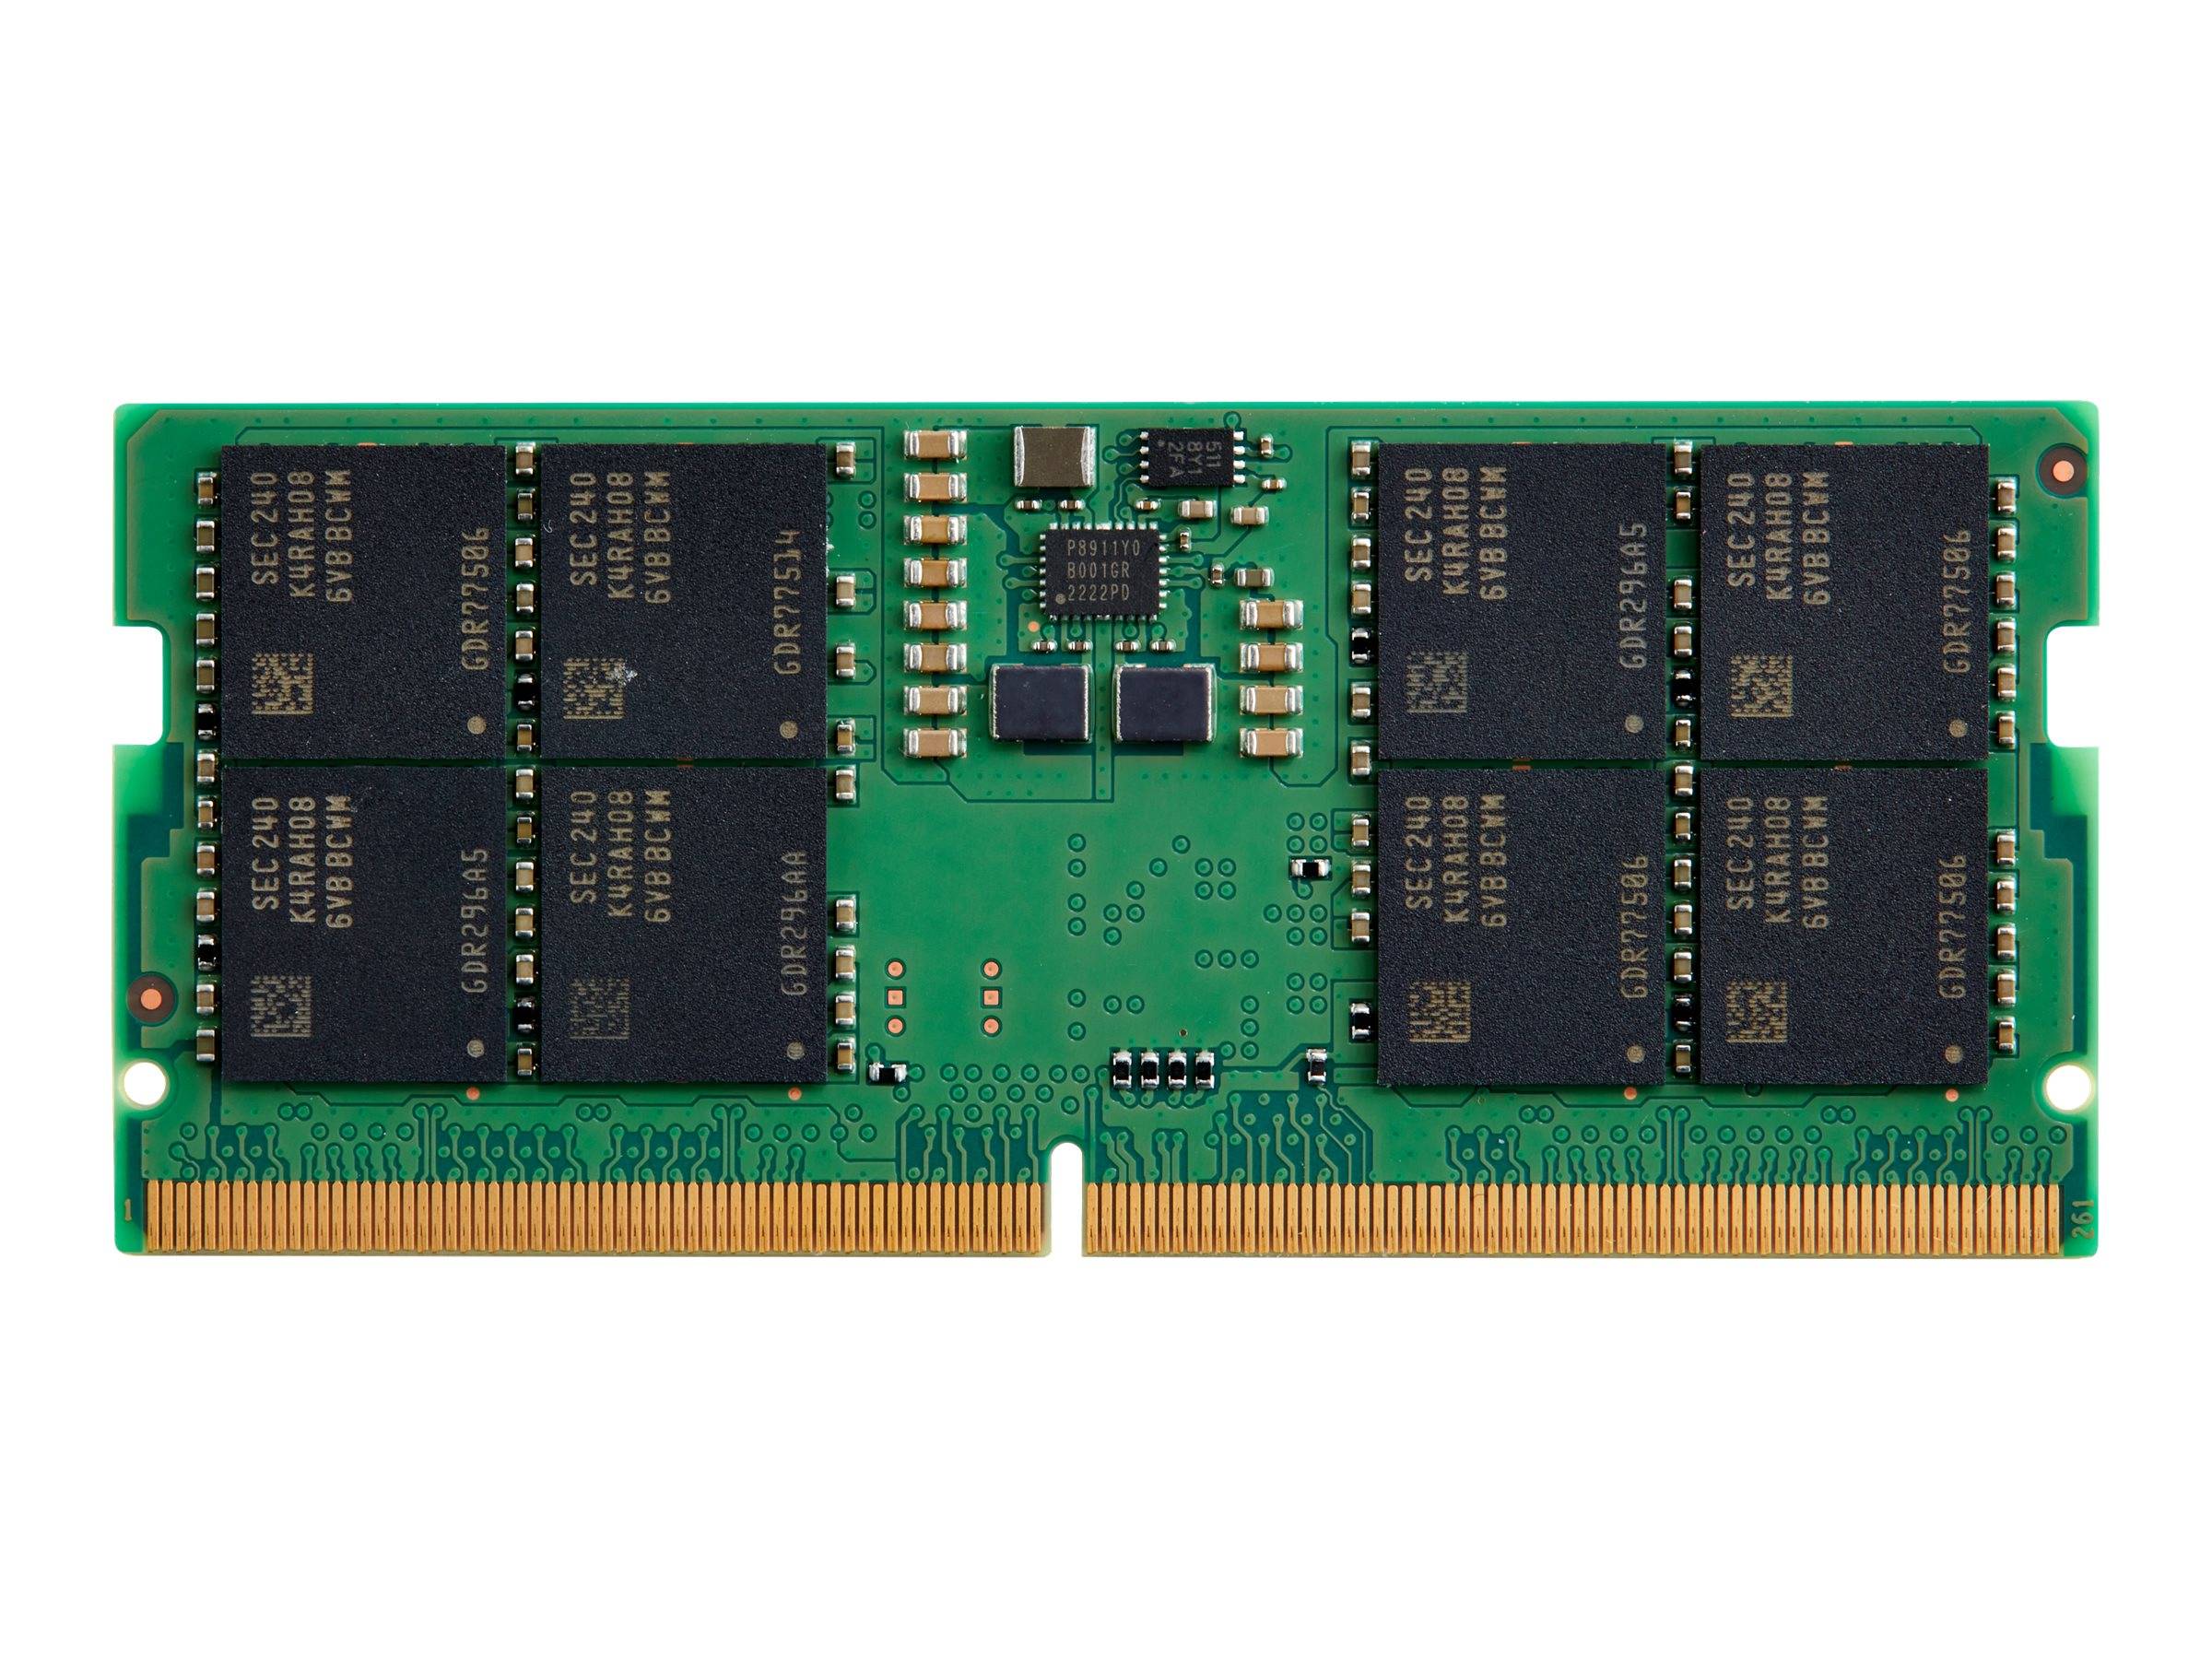 HP 16GB DDR5 5600MHz SODIMM Memory memory module